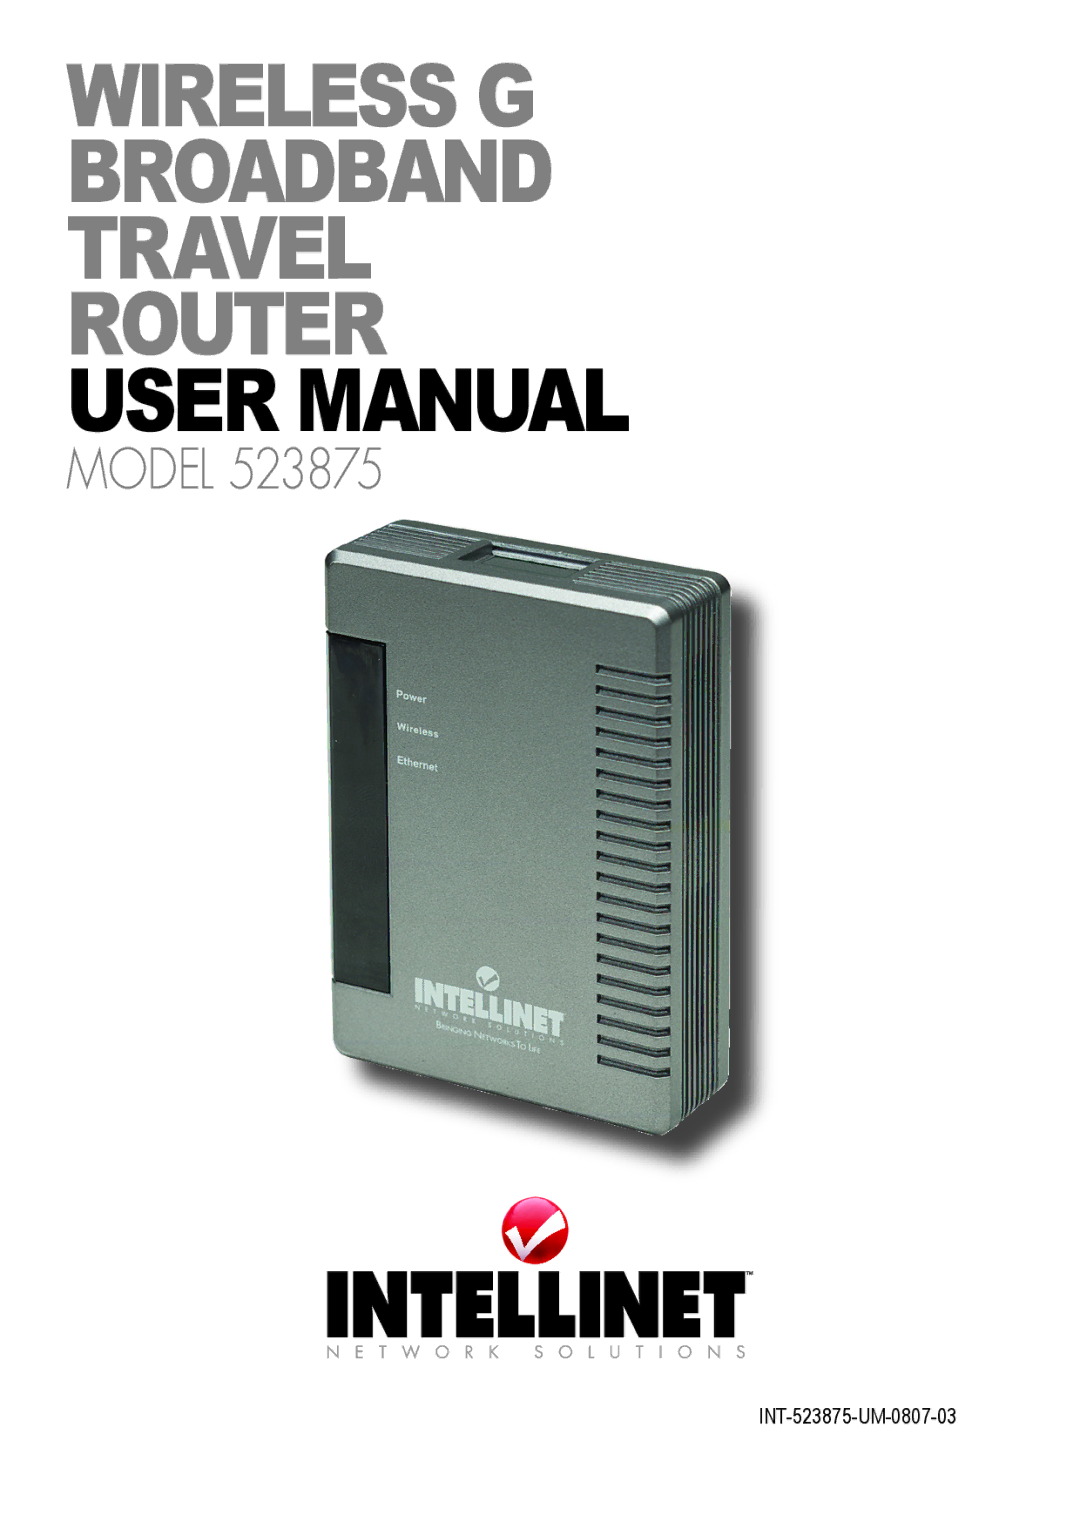 Intellinet Network Solutions 523875 user manual Model 